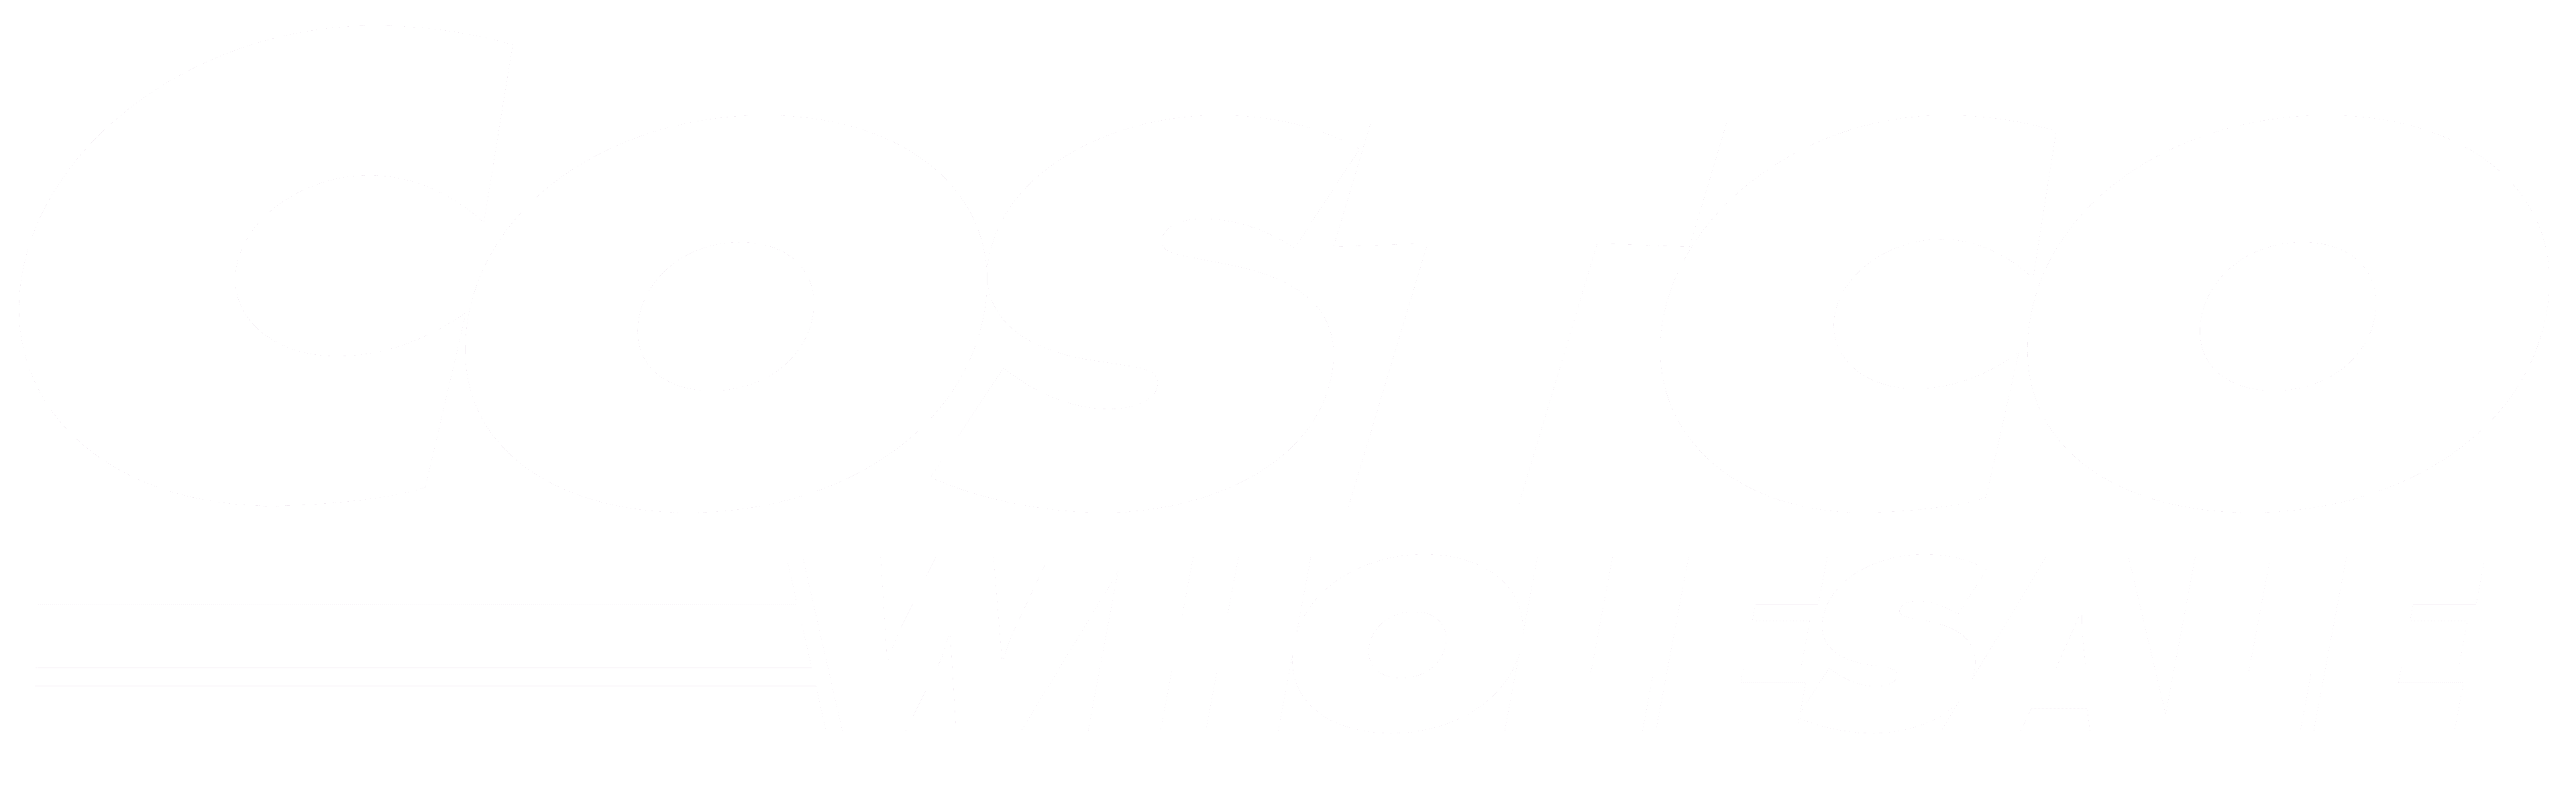 Costco-Wholesale-Logo